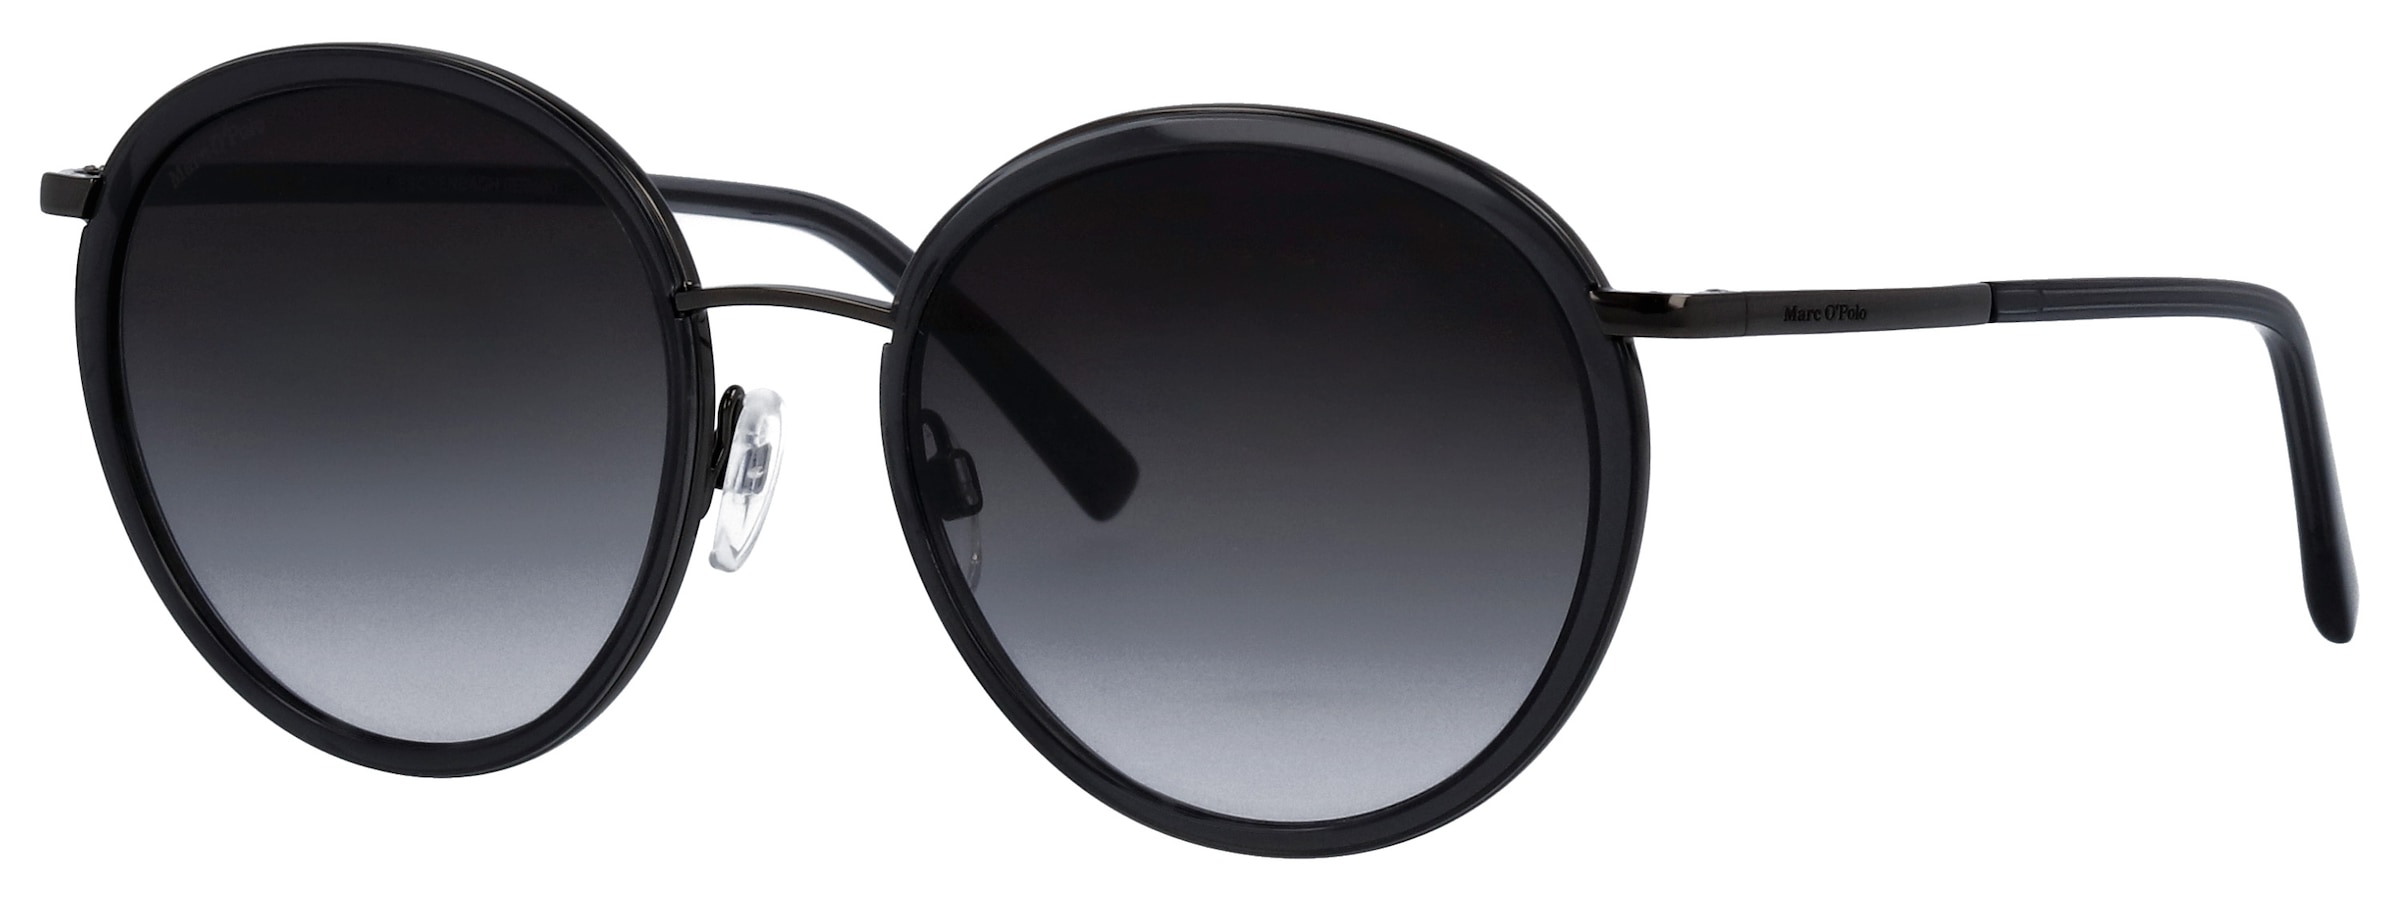 Sonnenbrille »Modell 505109«, Panto-Form